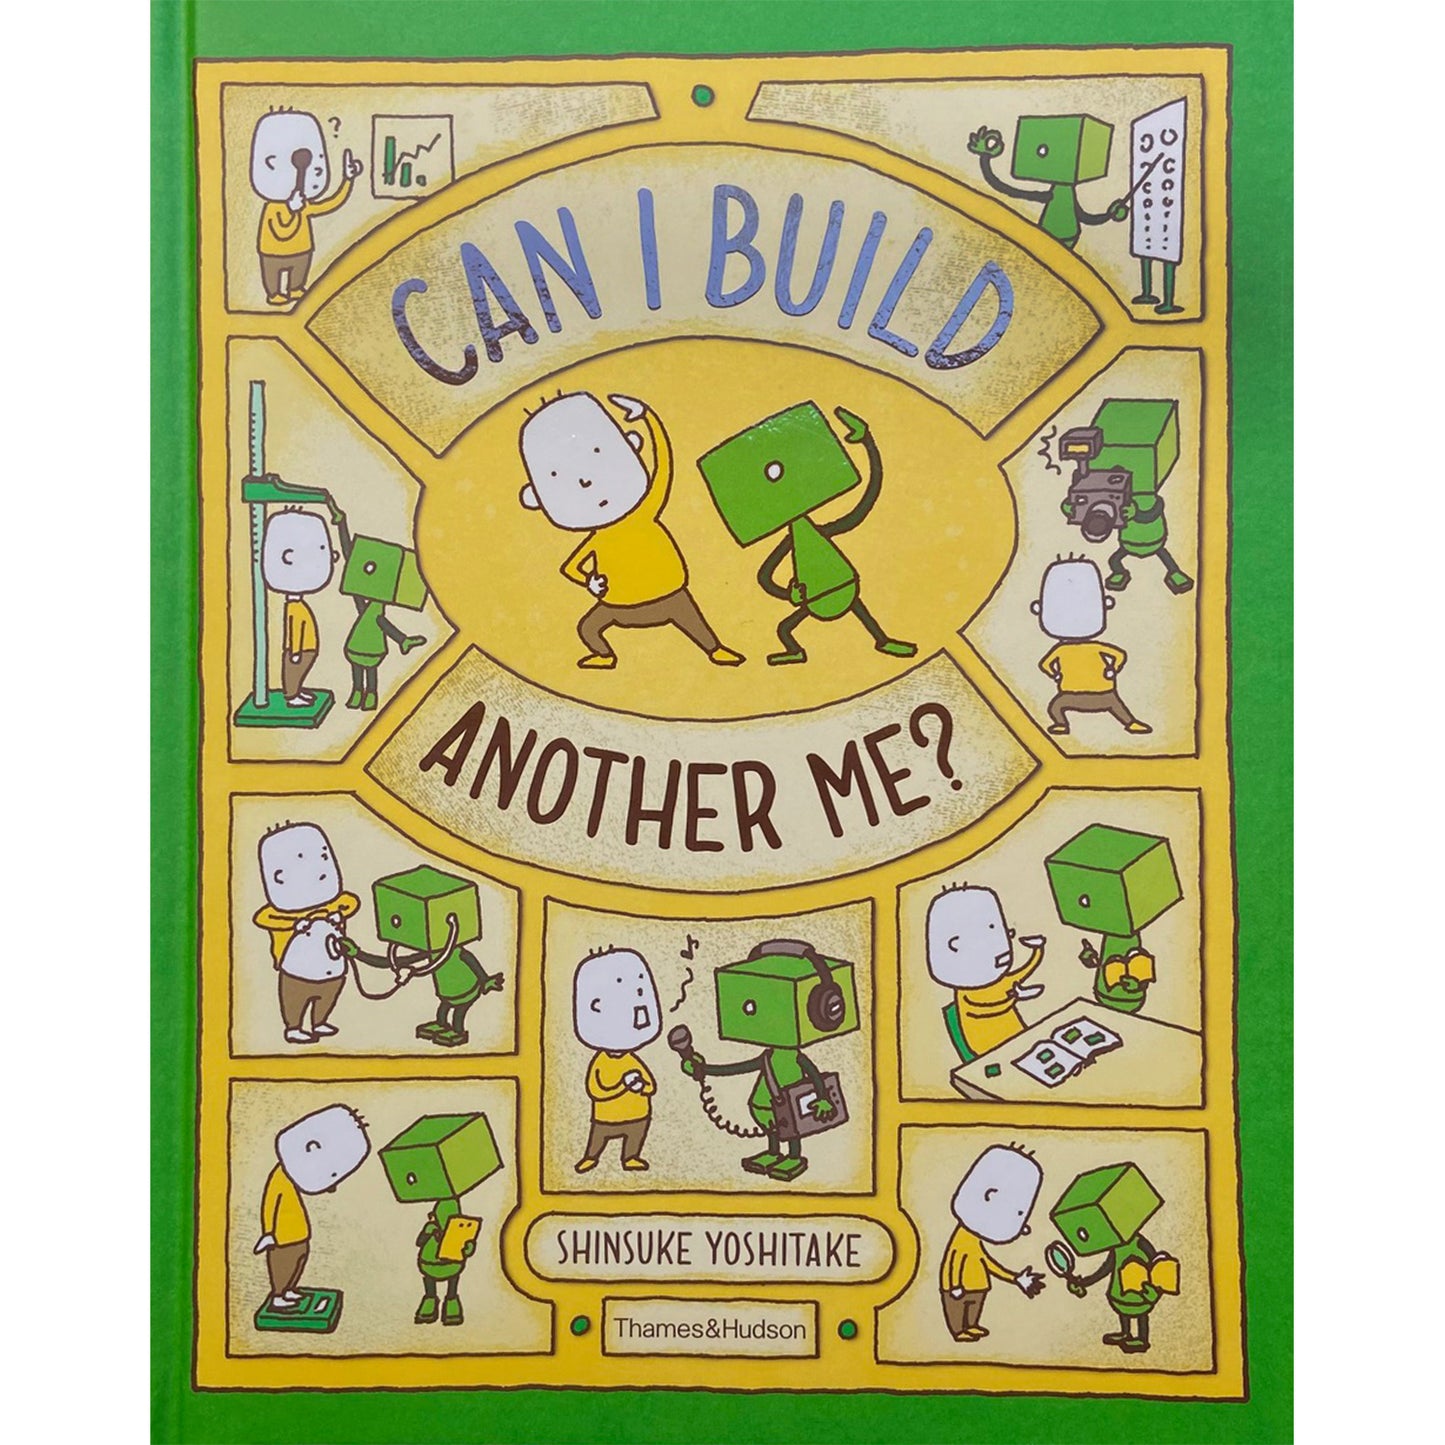 Can I Build Another Me? By Shinsuke Yoshitake